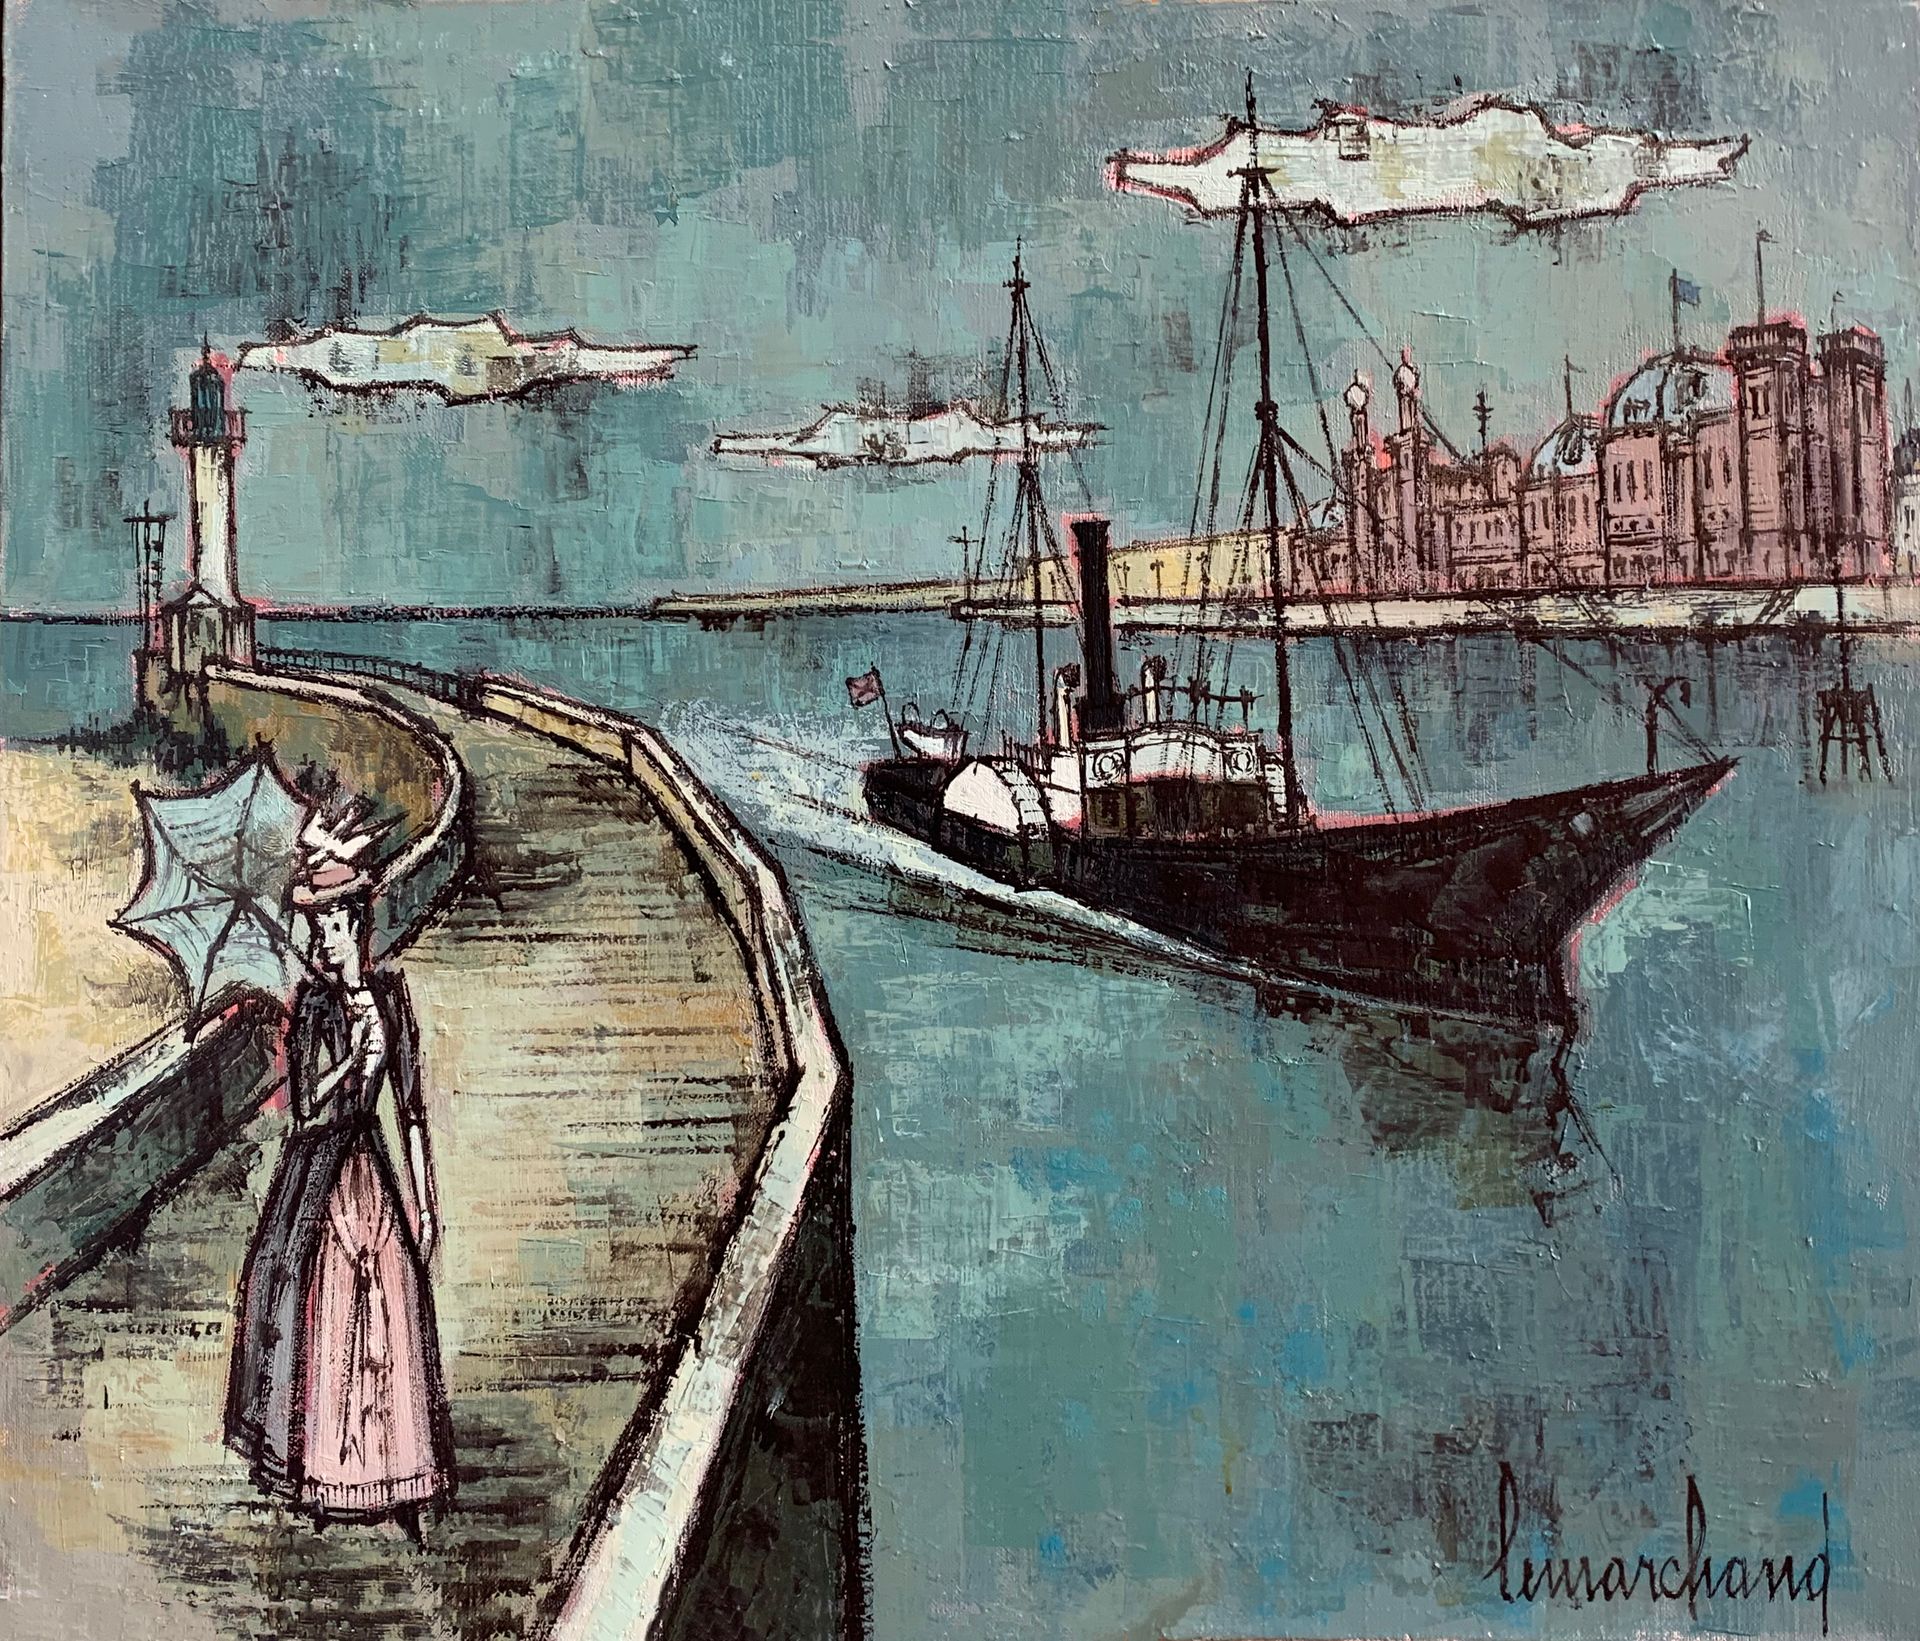 Null 皮埃尔-莱马赫德 (1906-1970)

海鸥

布面油画，右下角有签名，框架背面有标题

46 x 55厘米。